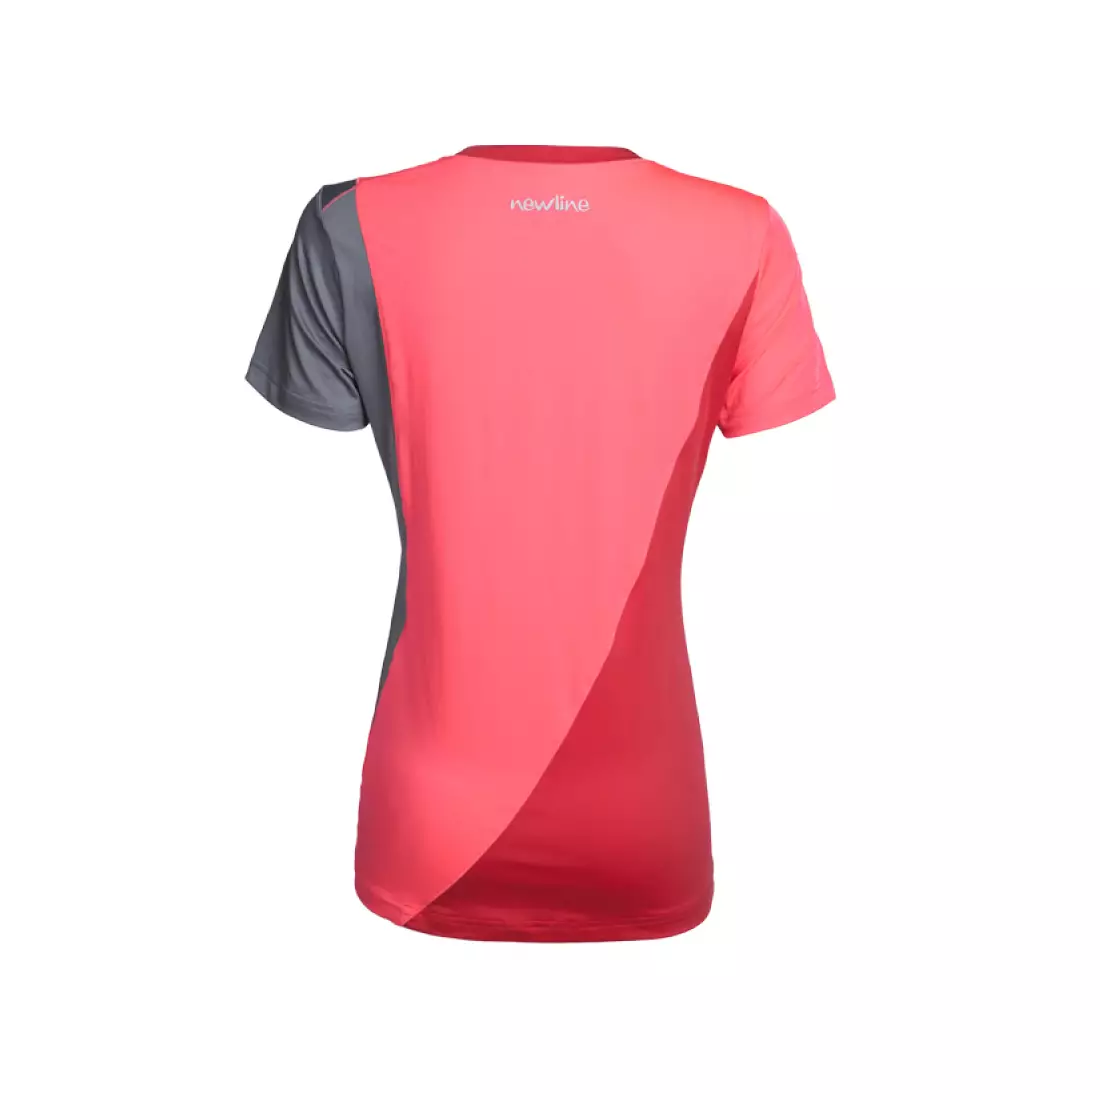 NEWLINE IMOTION TEE 10804-274 - women's running T-shirt